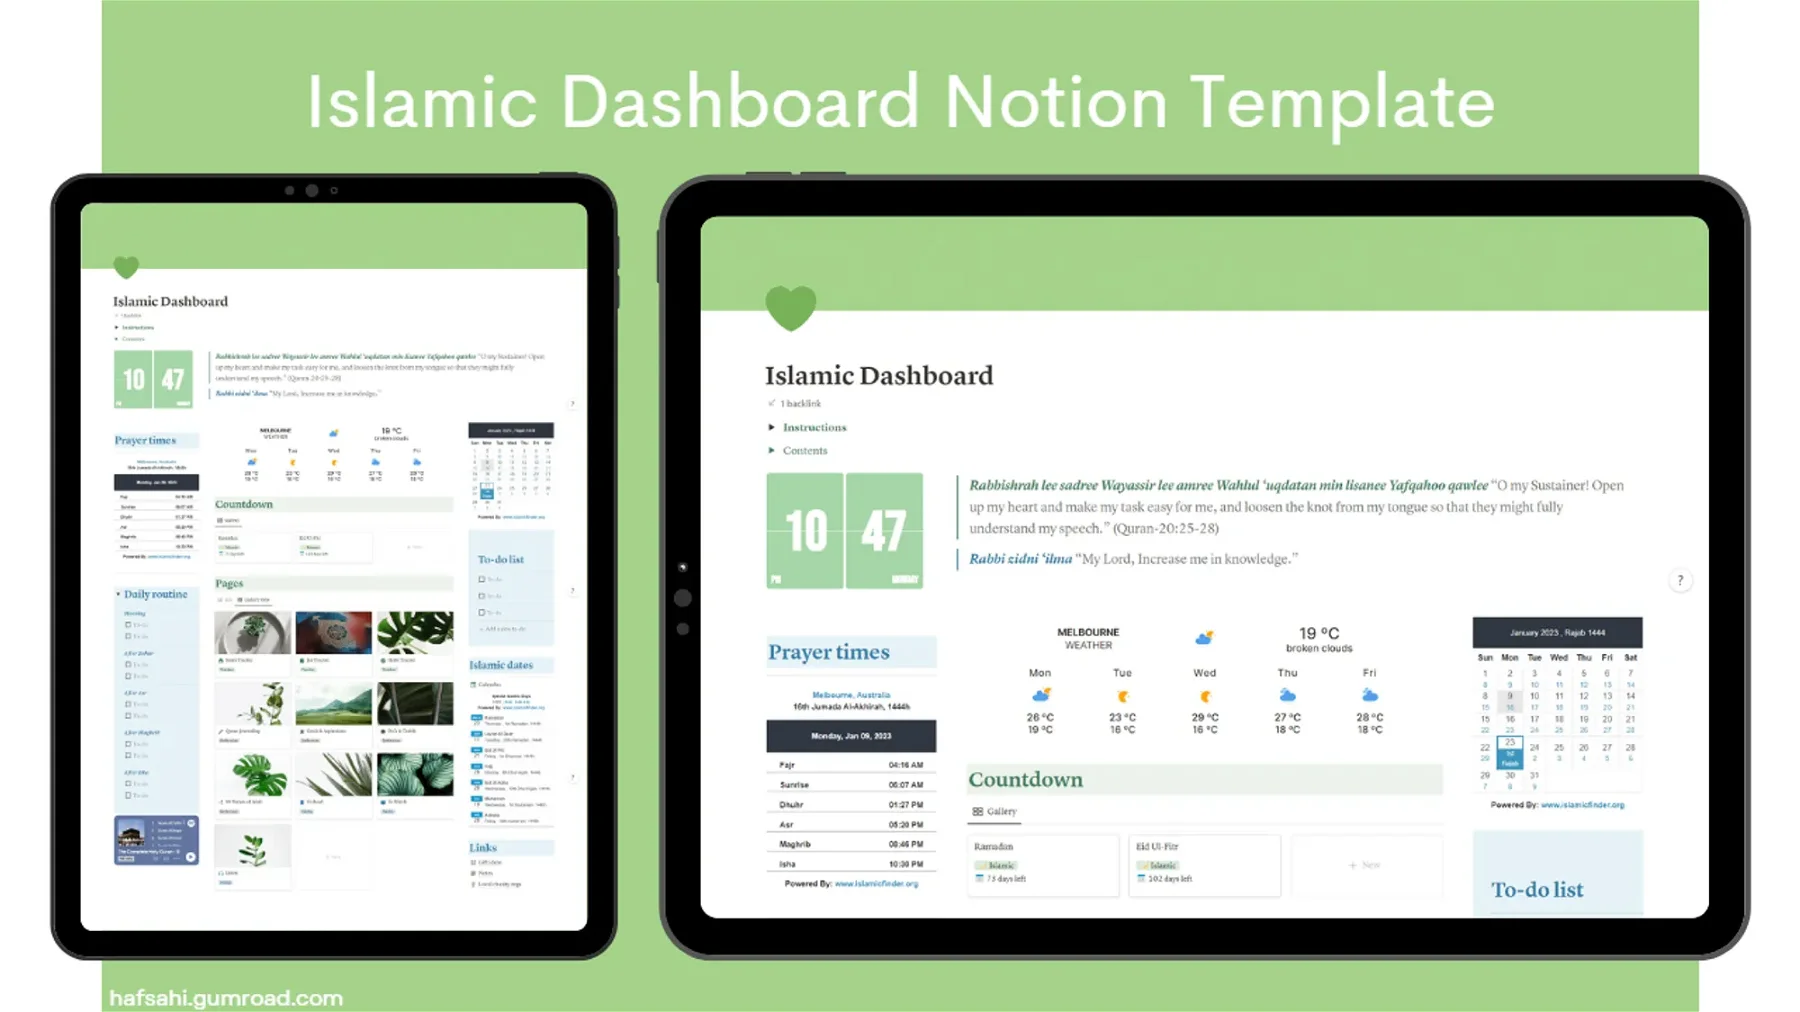 Islamic Notion Template | Prayer, Quran, Habit Tracker & More - Includes minimalistic version!